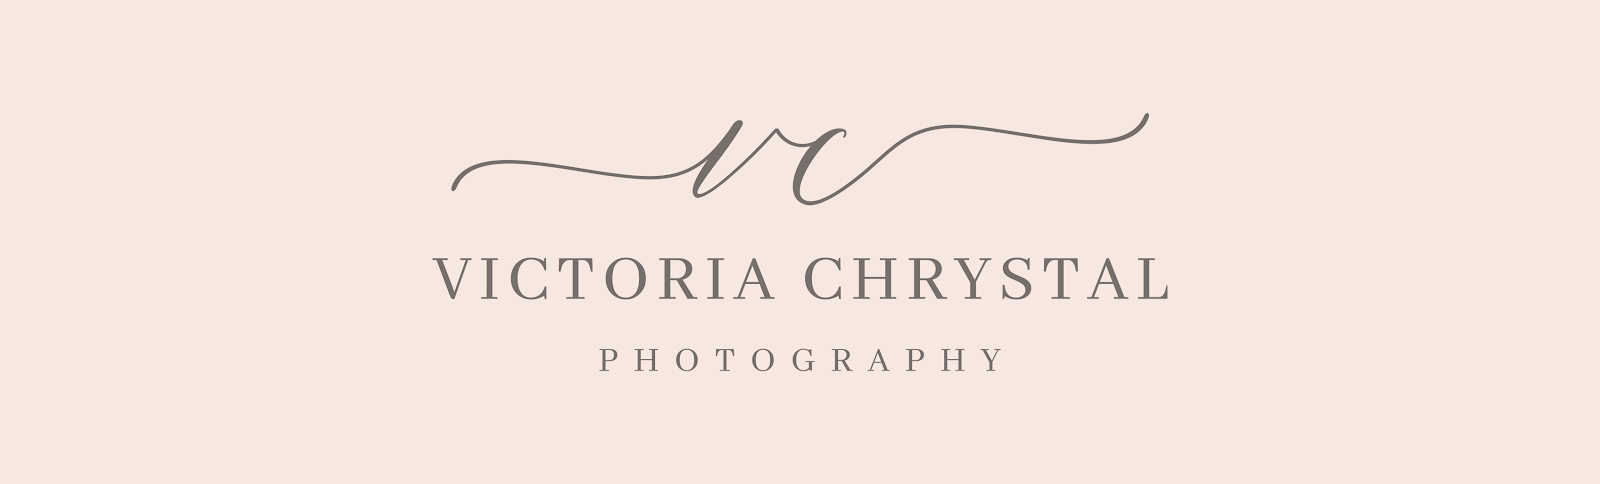 Victoria Chrystal Photography Blog